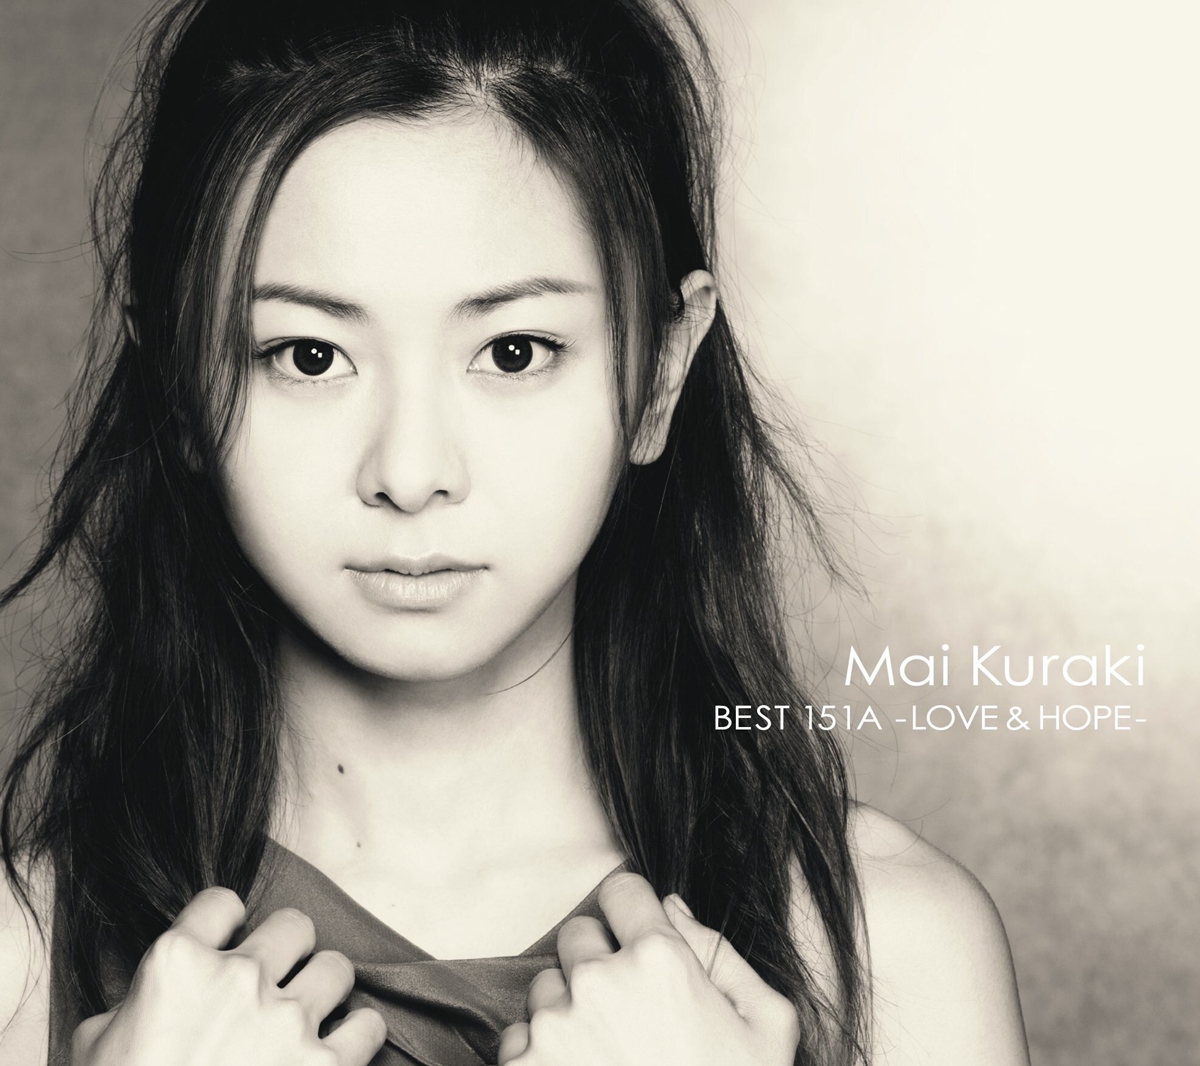 Cover art for『Mai Kuraki - DYNAMITE』from the release『Mai Kuraki BEST 151A -LOVE & HOPE-』